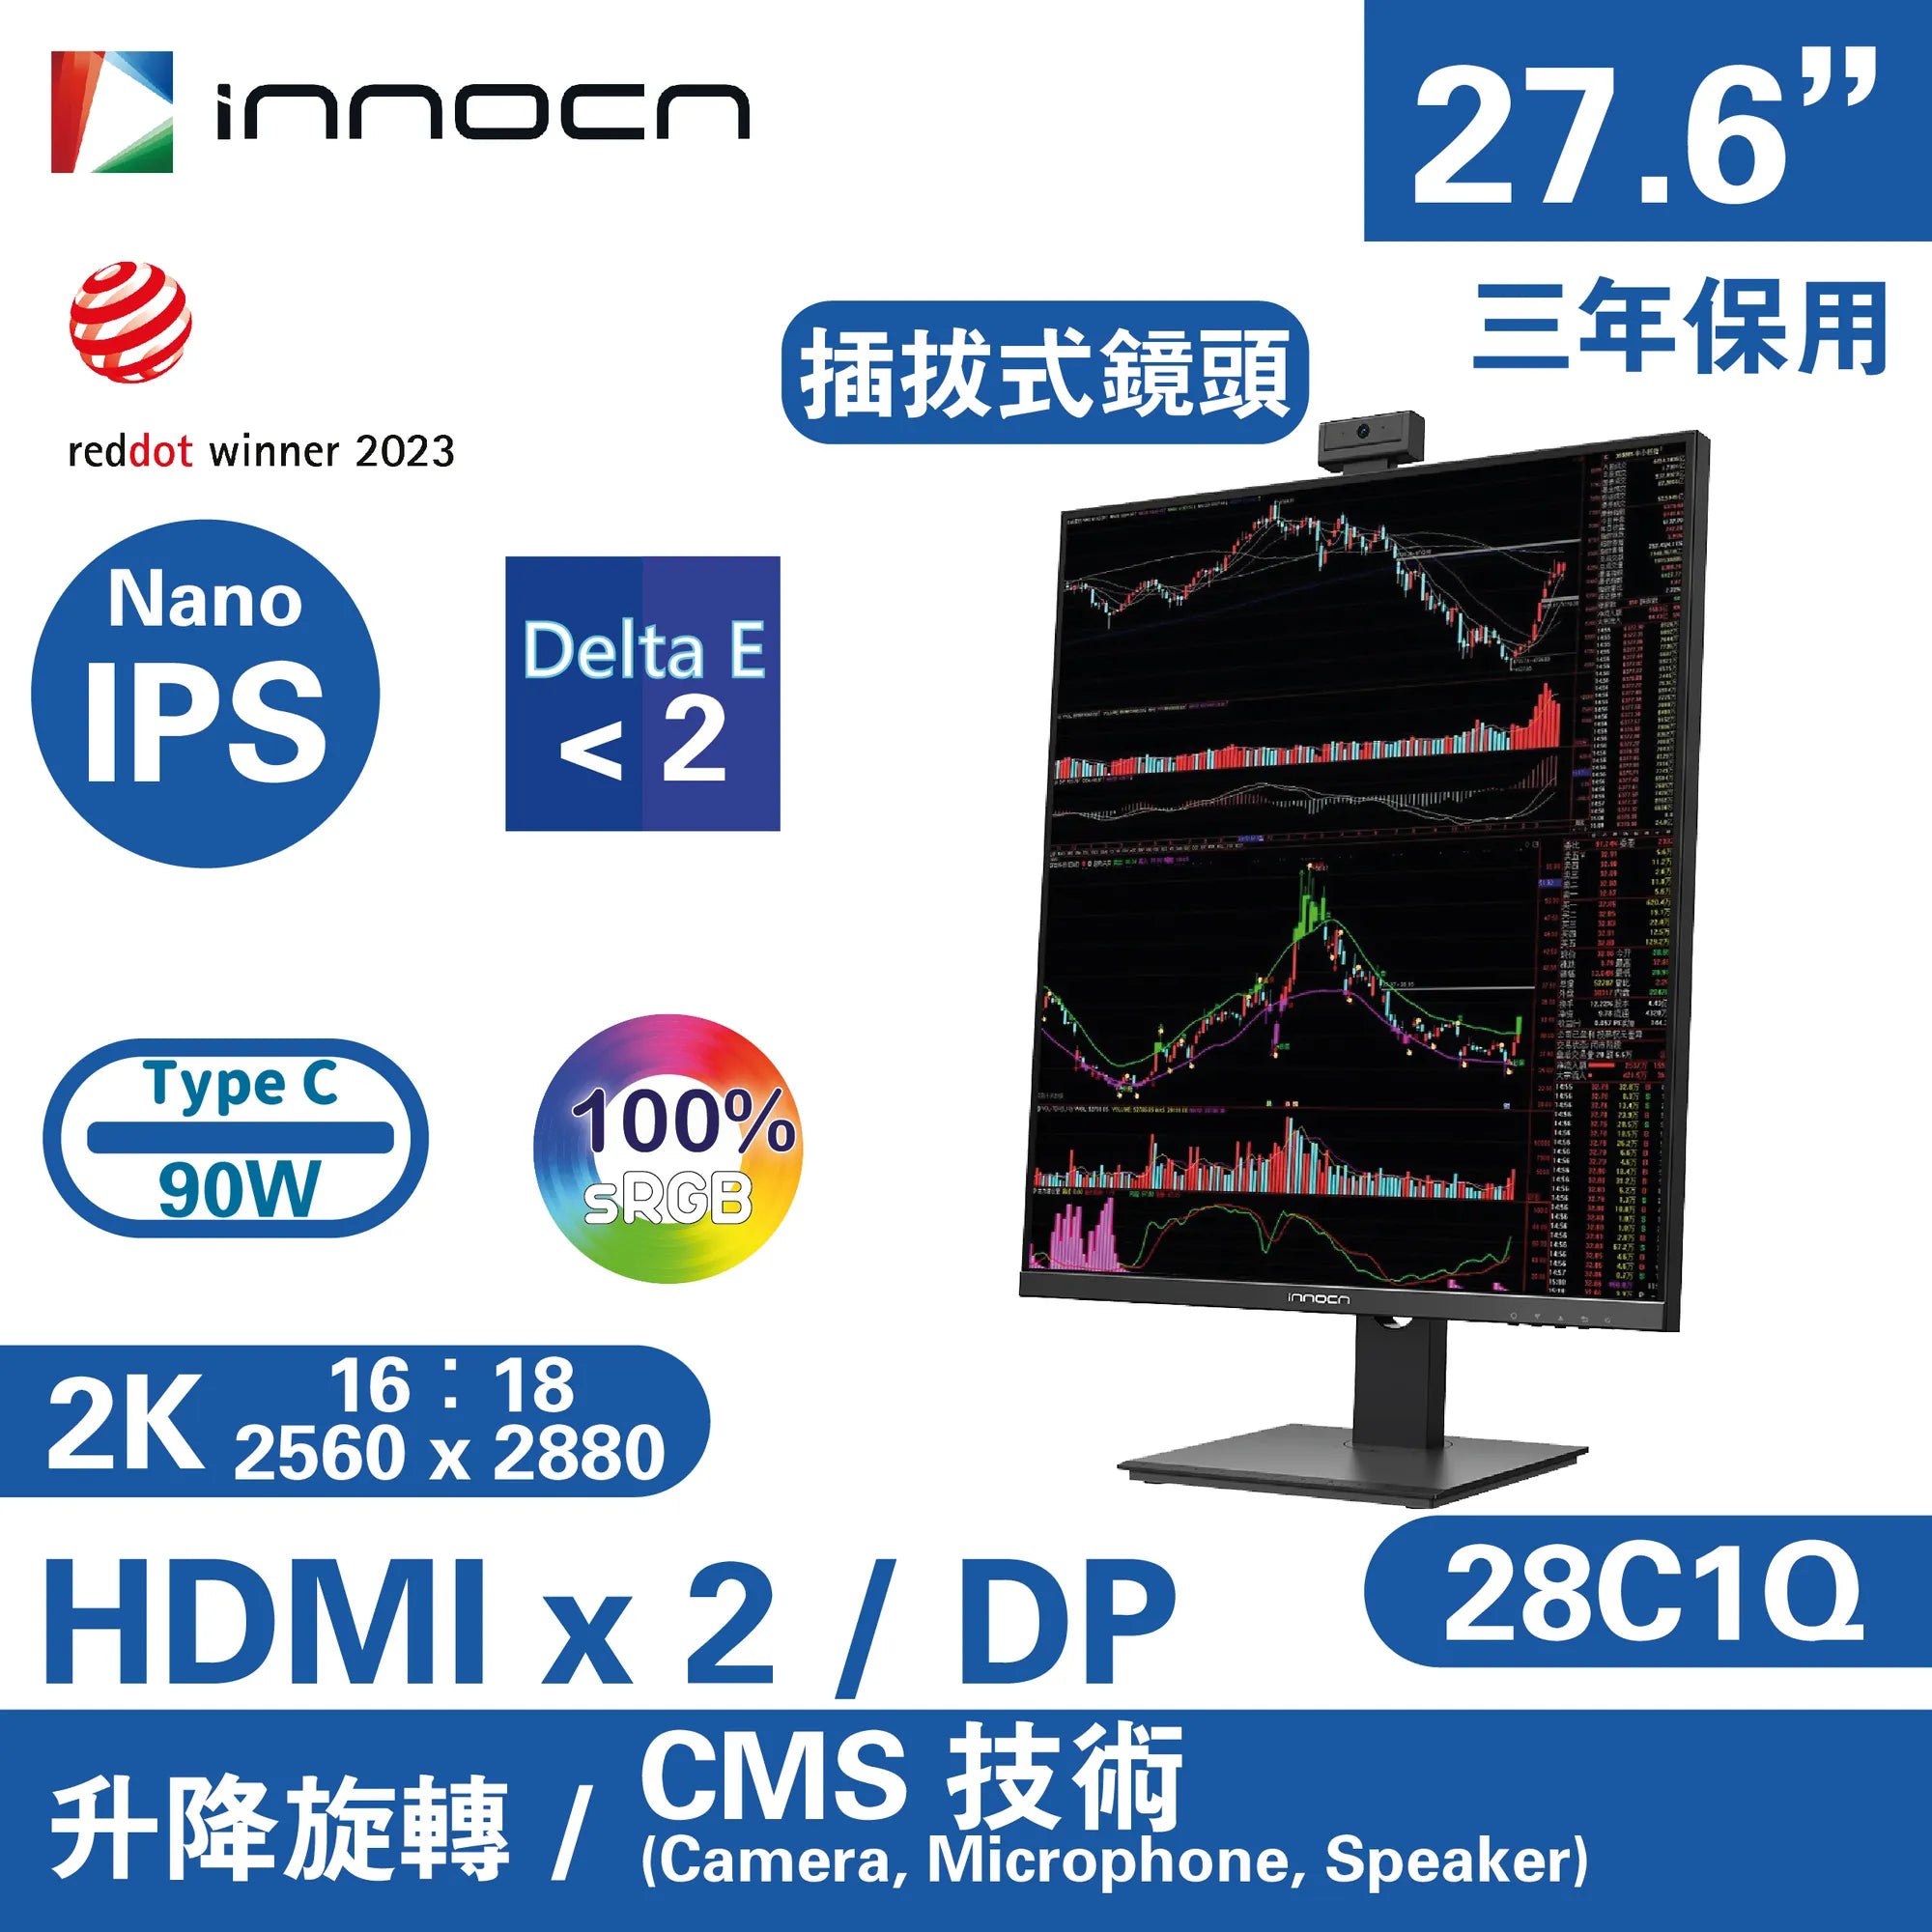 INNOCN 28C1Q 商業顯示器 (27.6吋 / SDQHD / 60Hz / Nano IPS / HDR) - 2560 x 2880 年上門保養